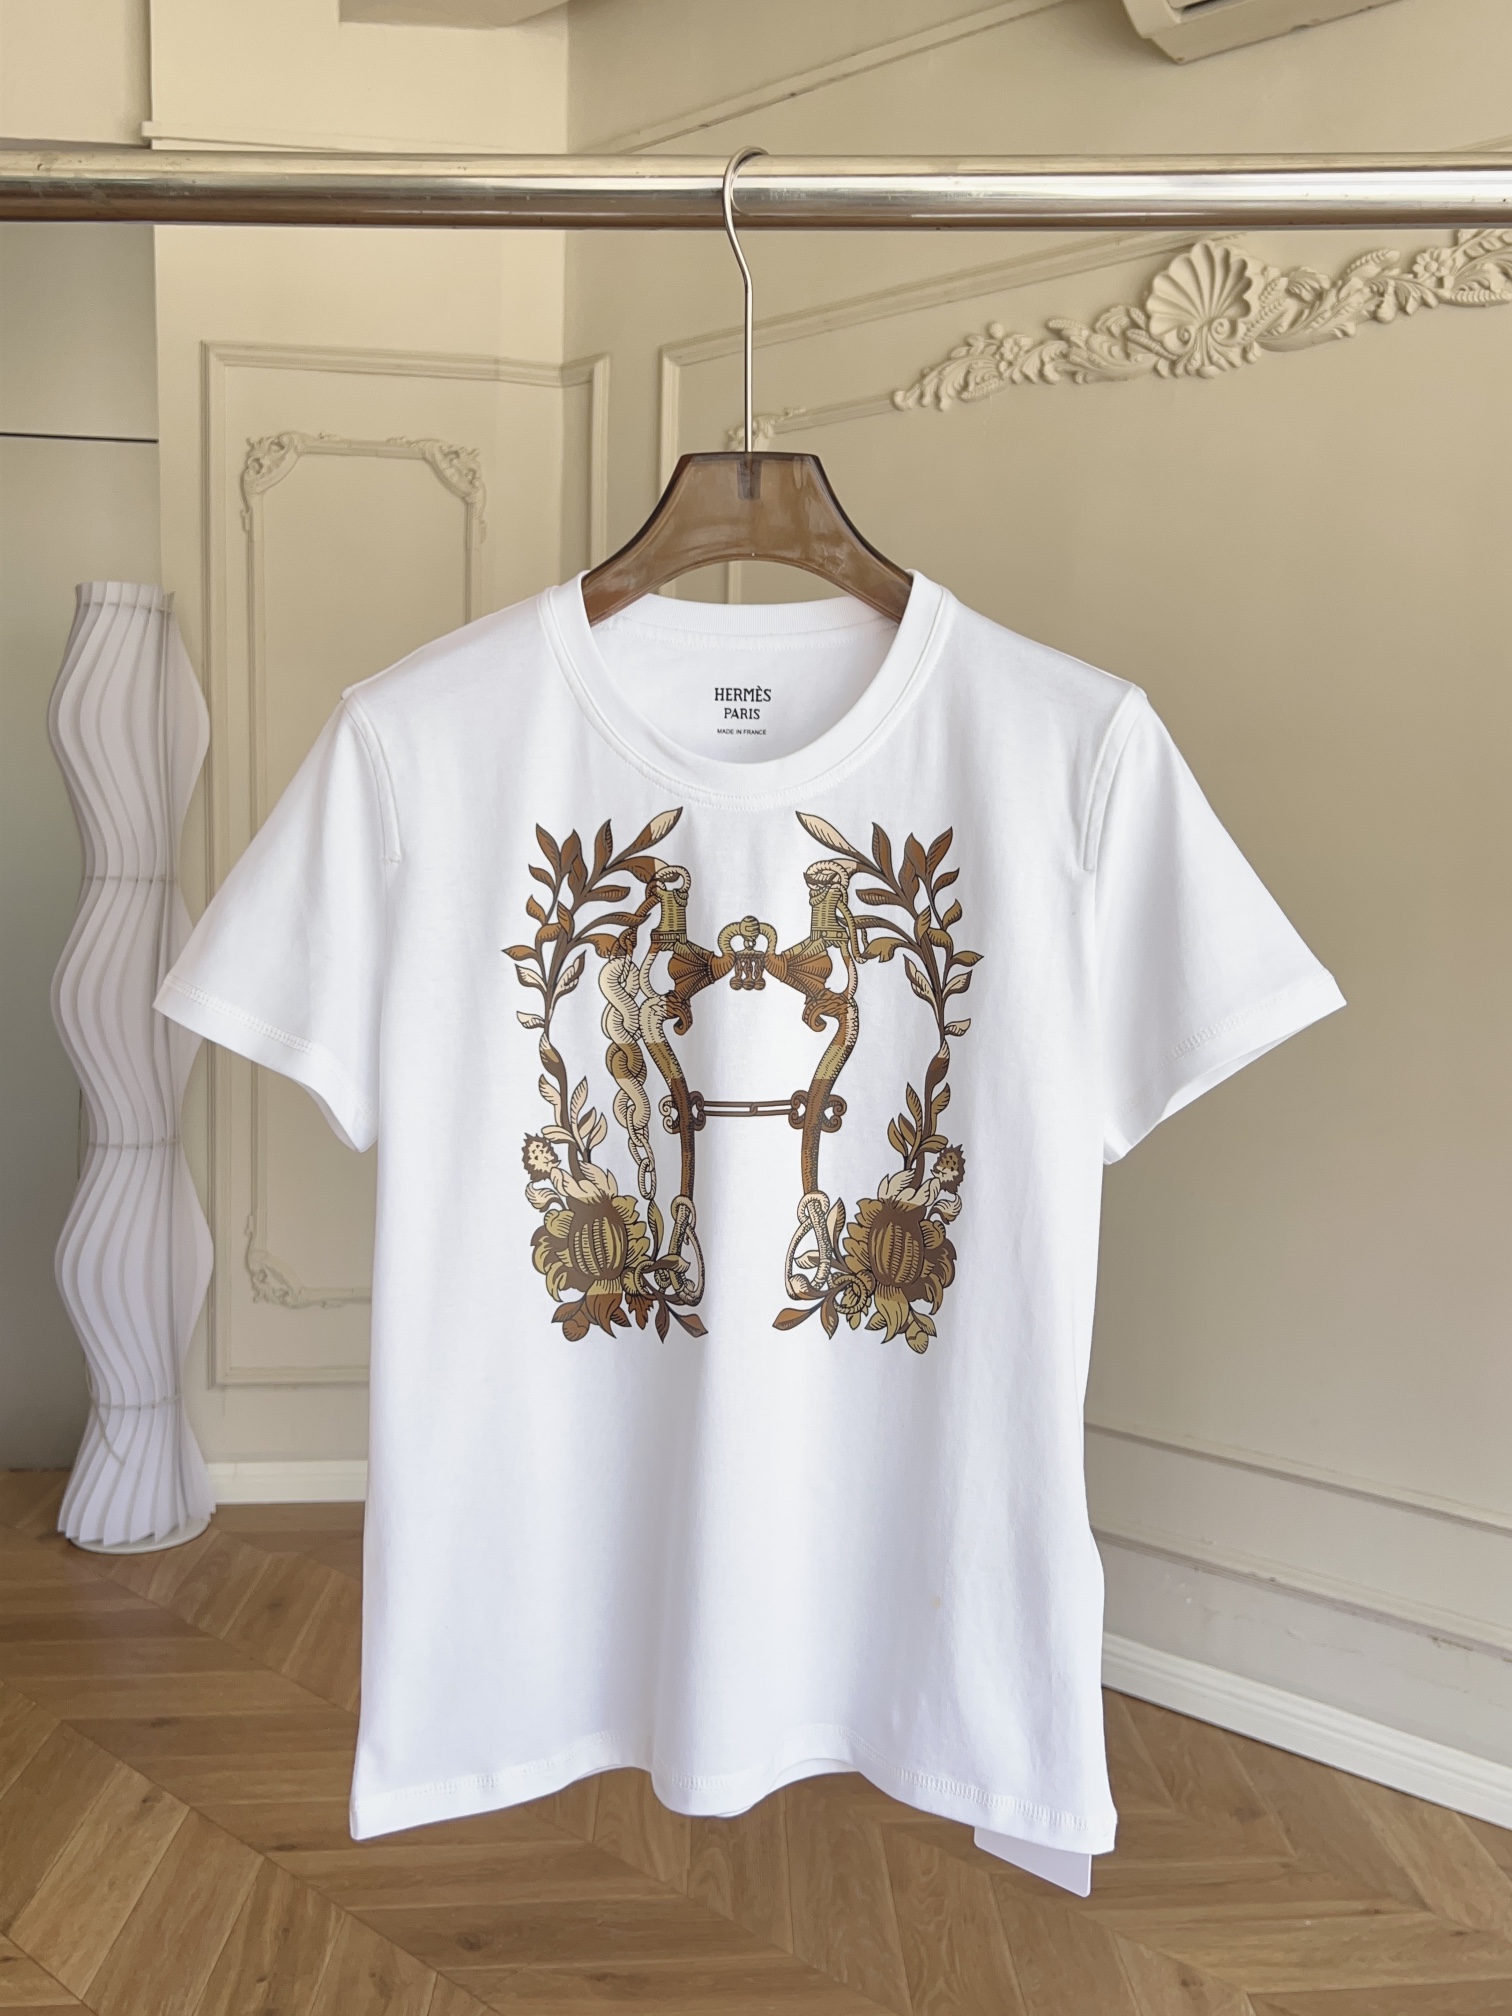 Hermes Clothing T-Shirt White Printing Women Cotton Fashion Casual